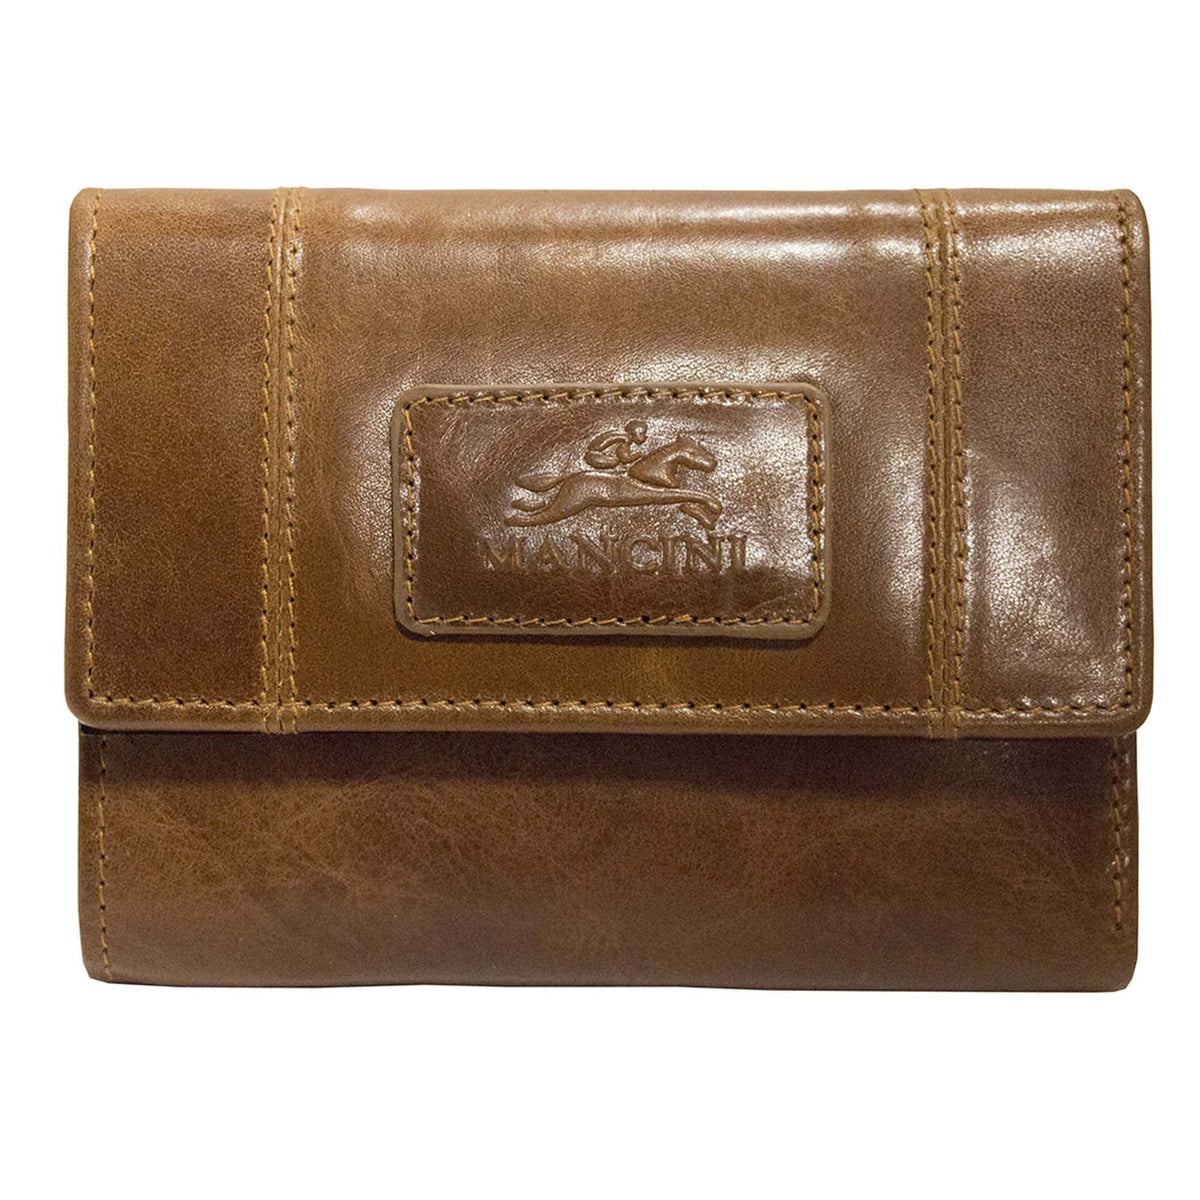 Mancini Casablanca Ladie's RFID Secure Small Clutch Wallet